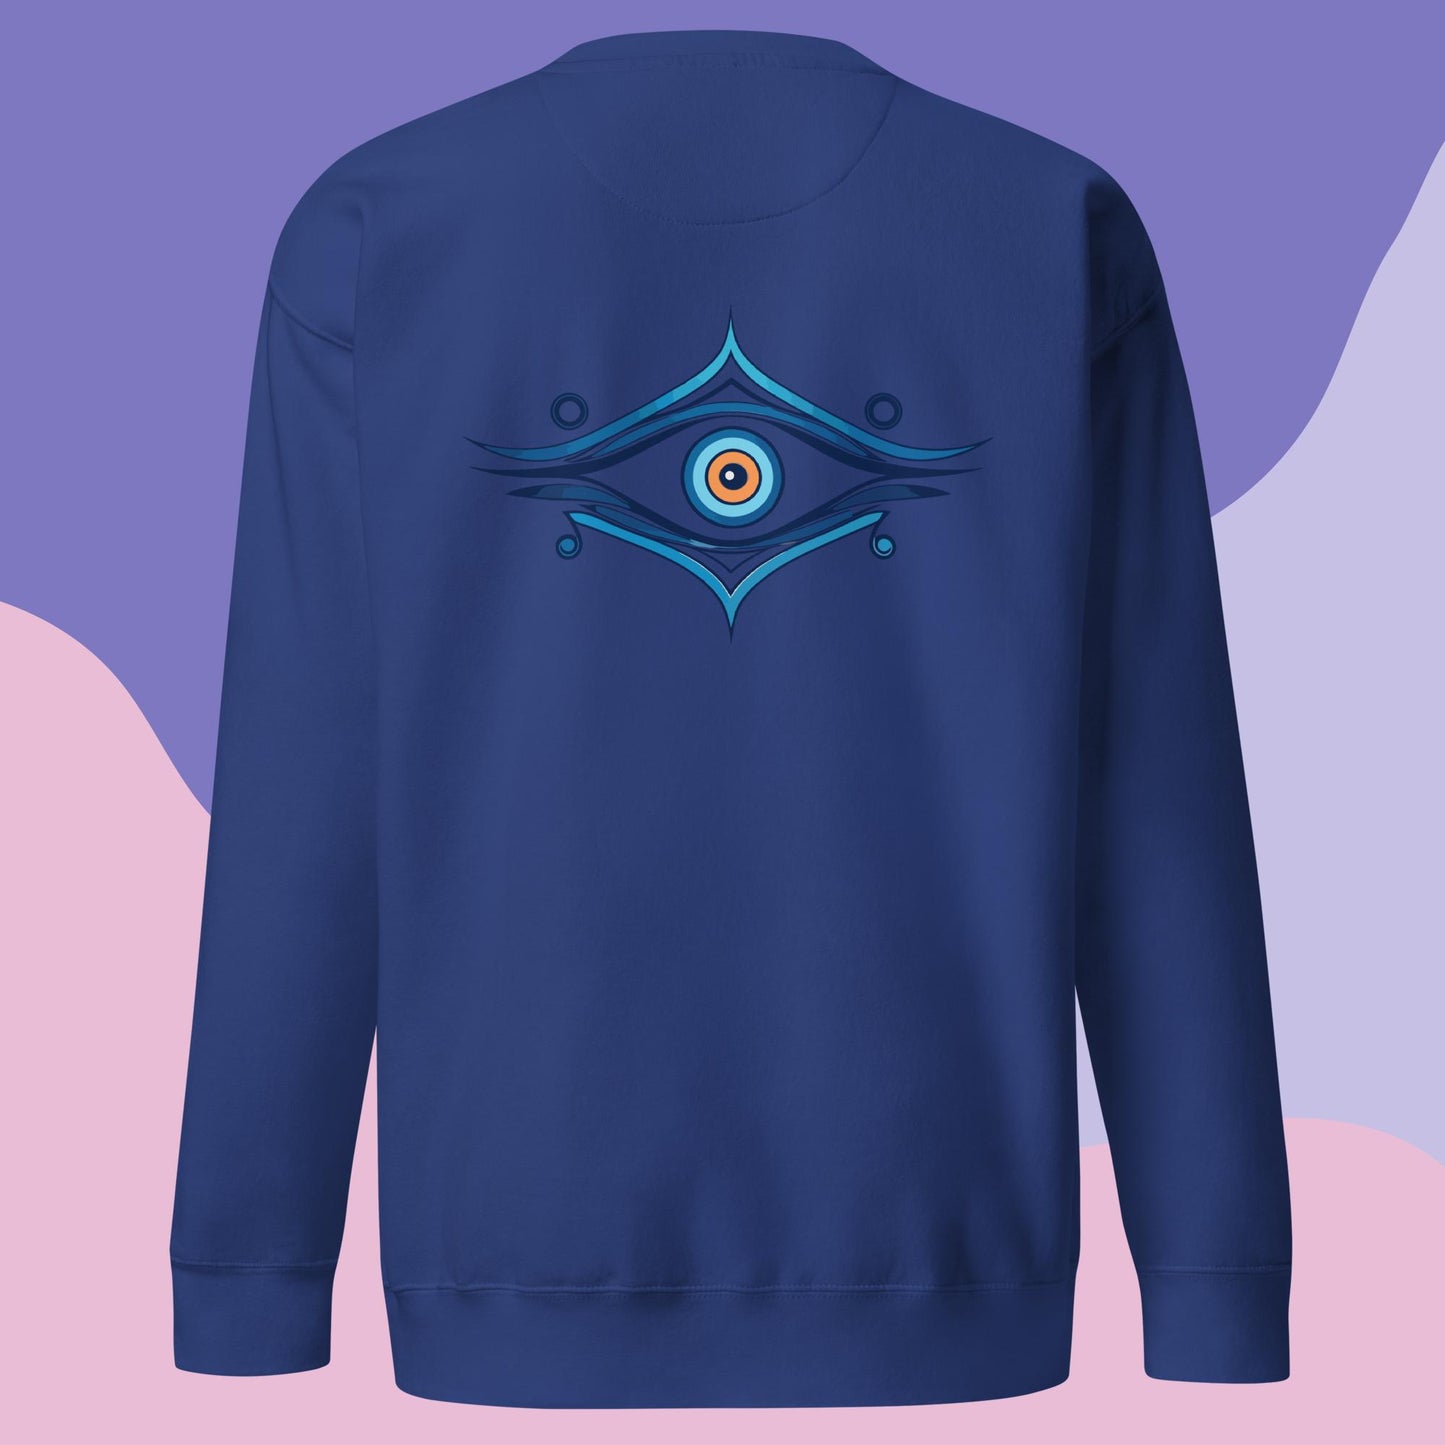 Greek Evil Eye Sweatshirt